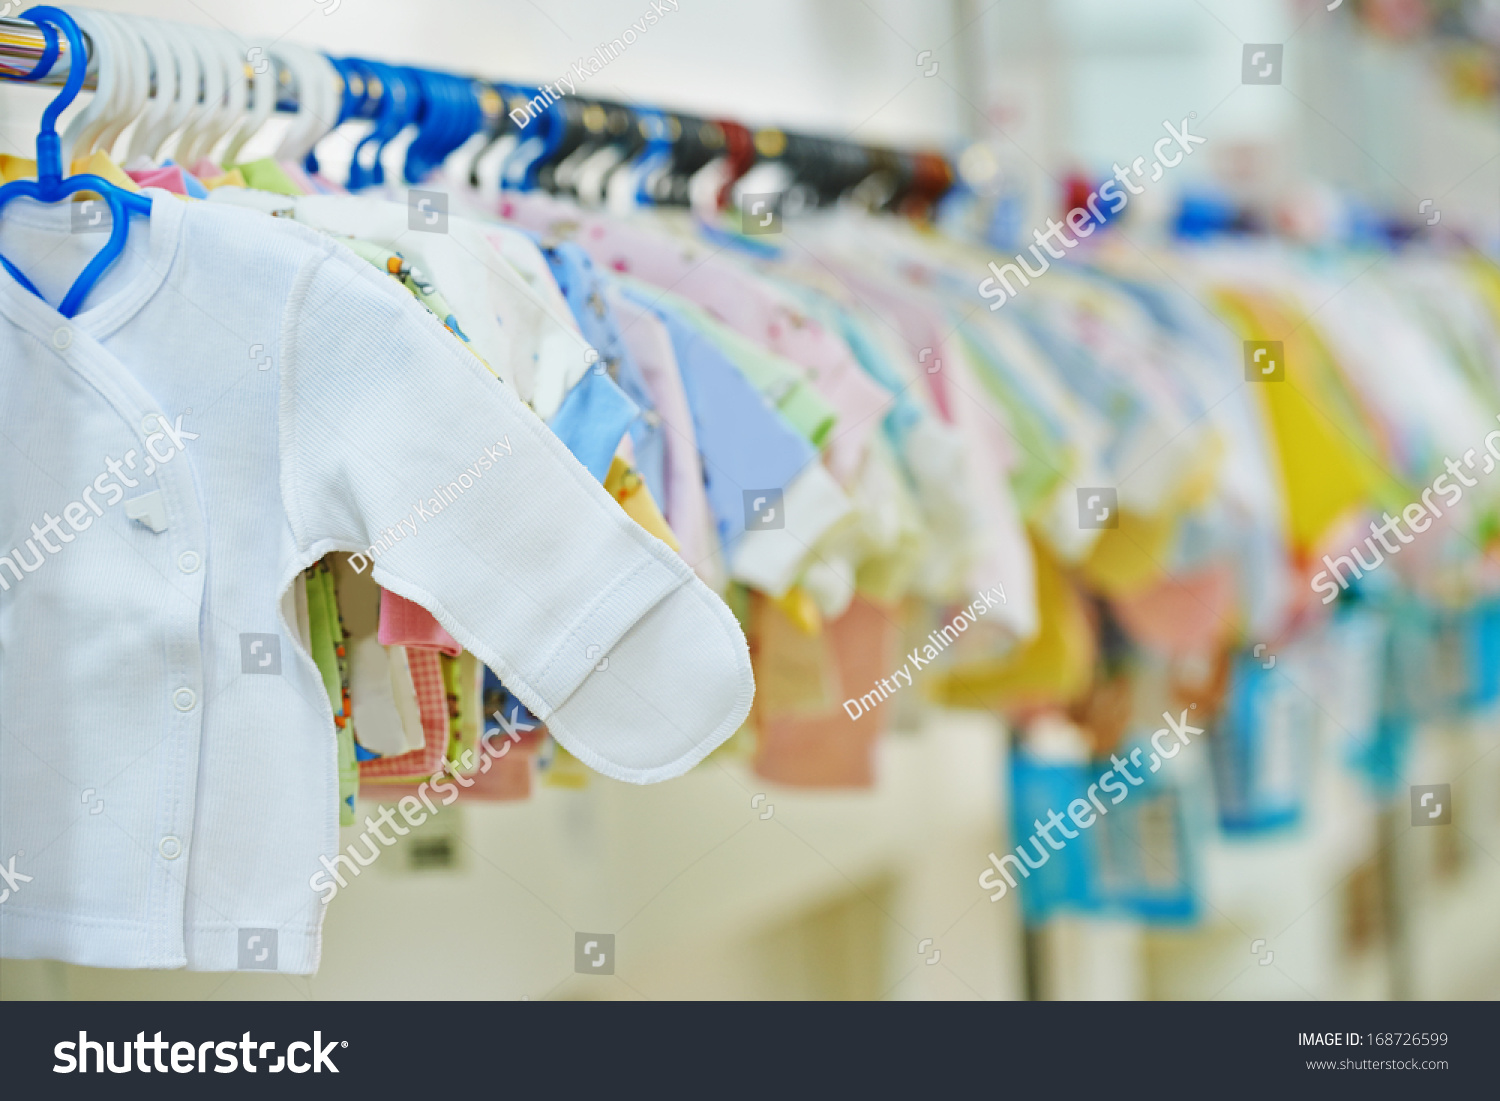 newborn clothing stores